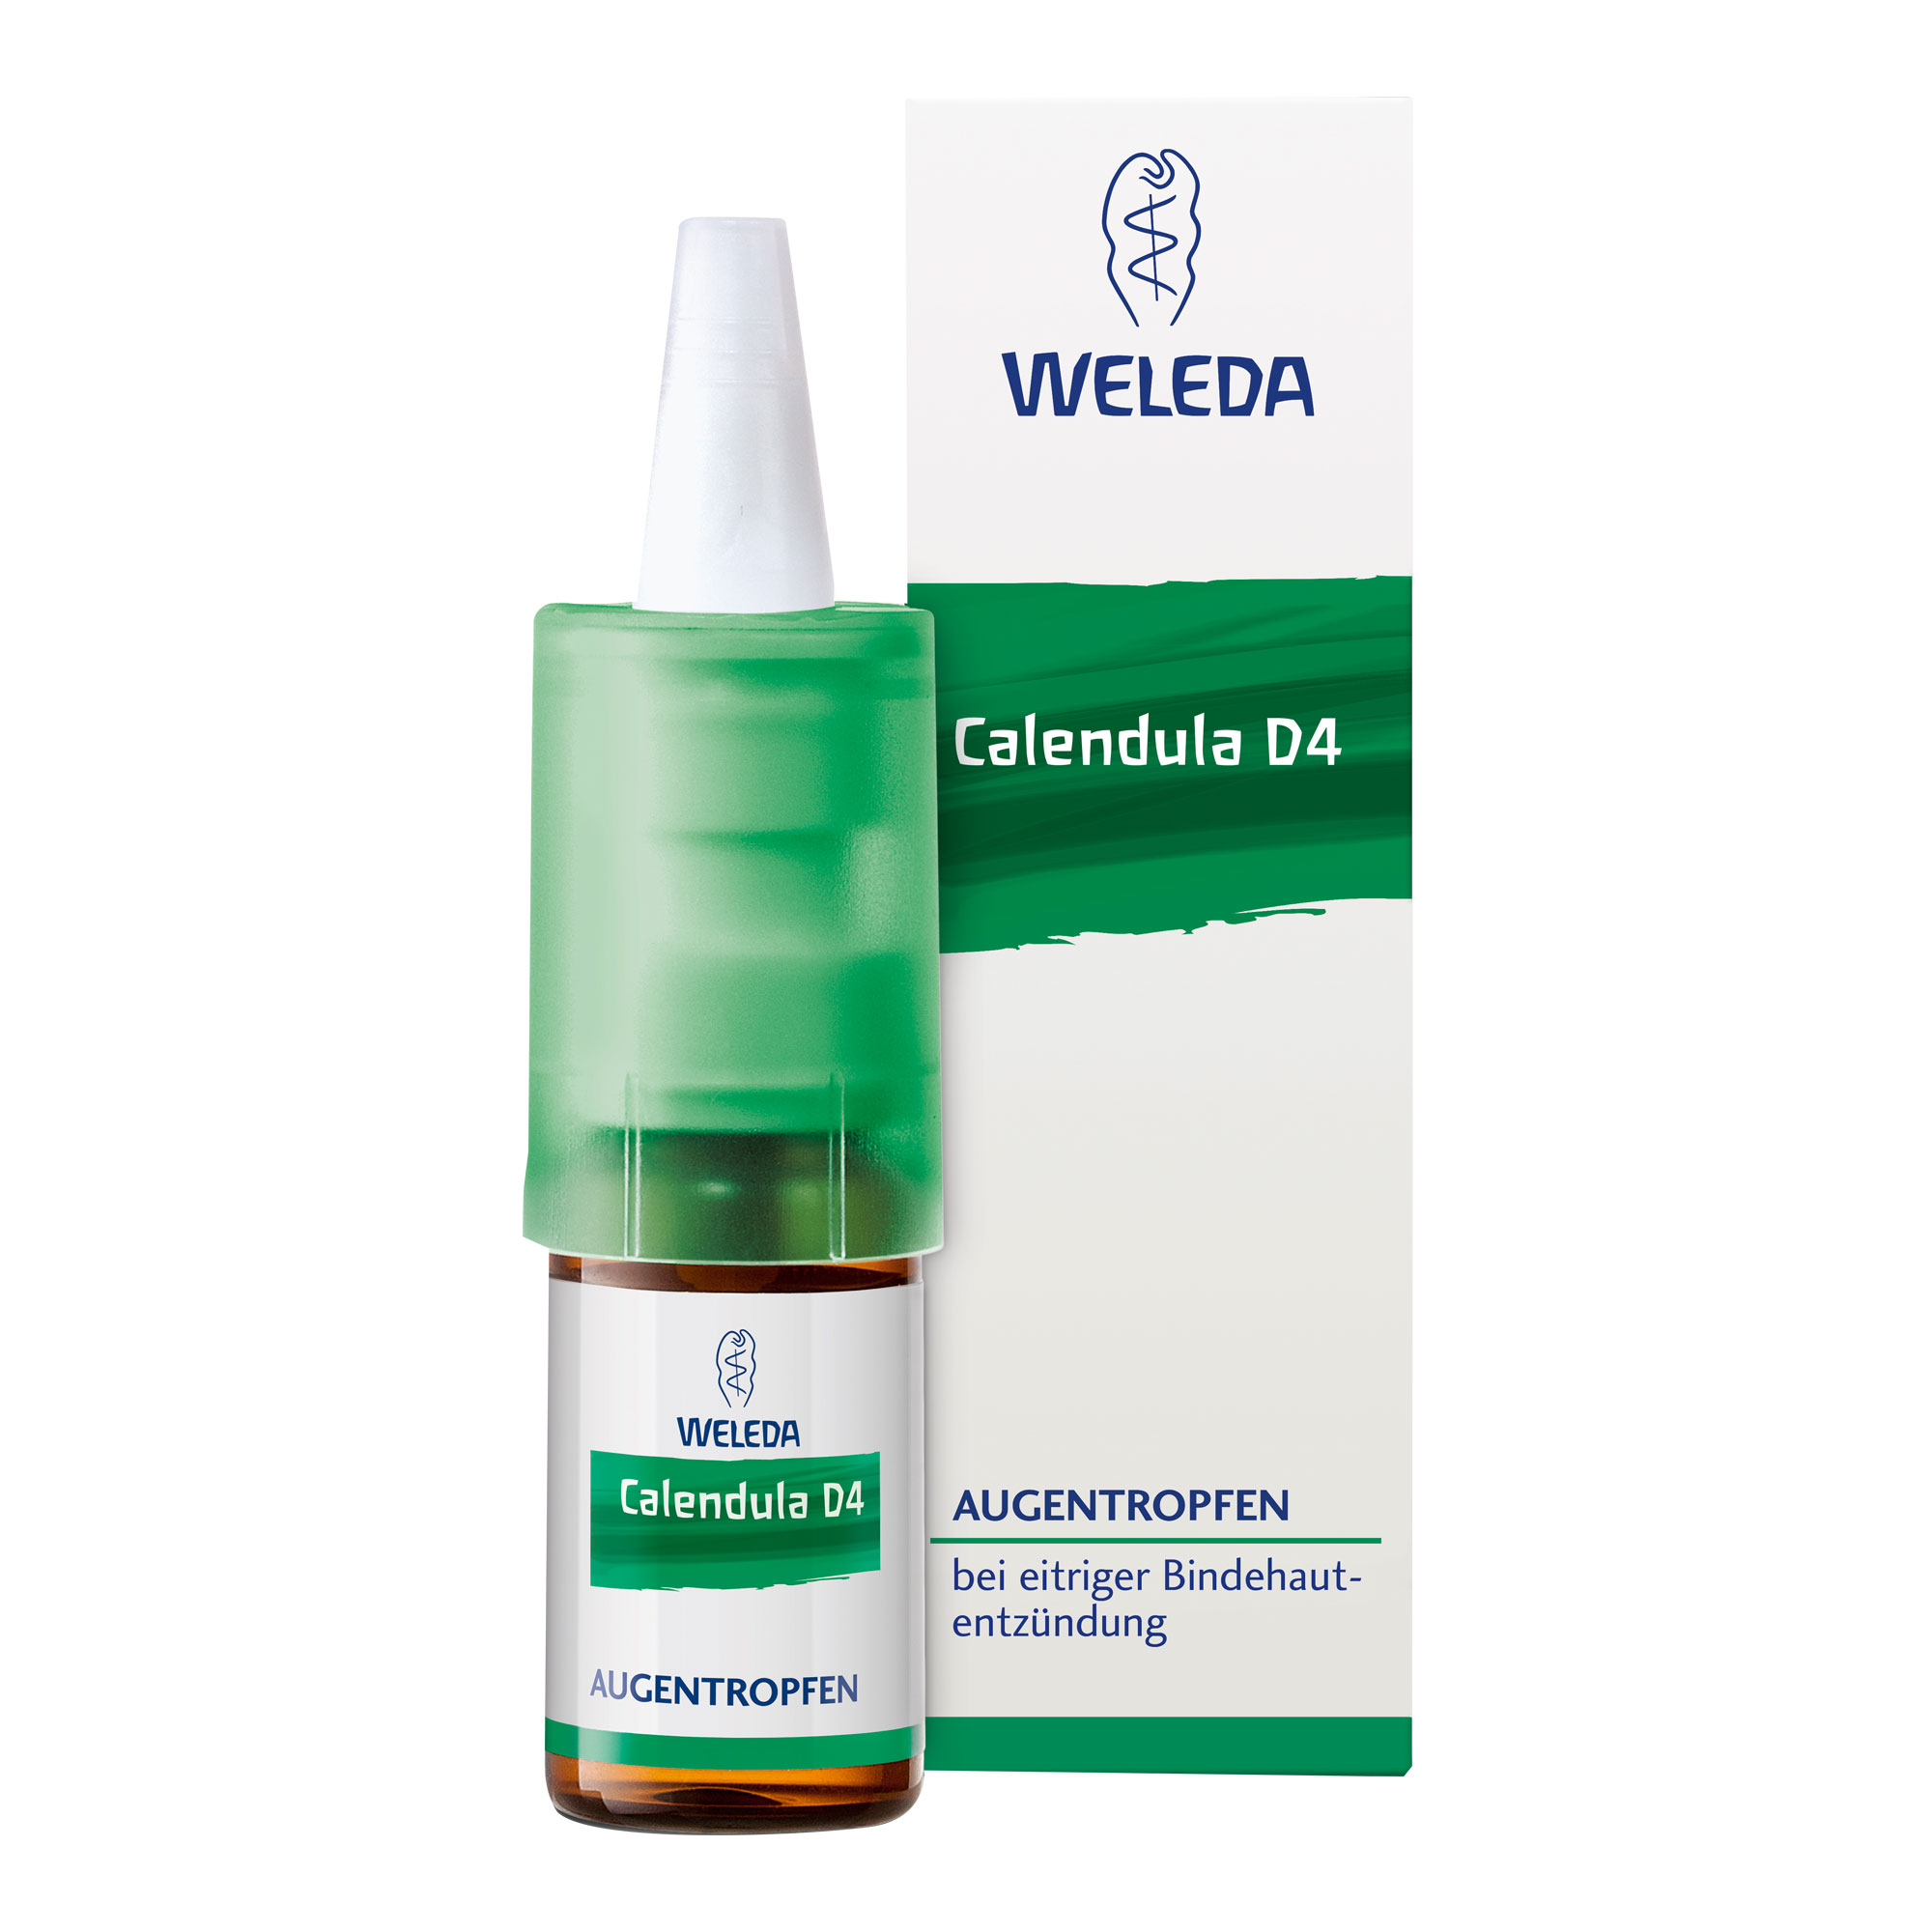 Fördert den Heilungsprozess bei eitriger Bindehautentzündung mit einem Auszug aus Calendula officinalis.